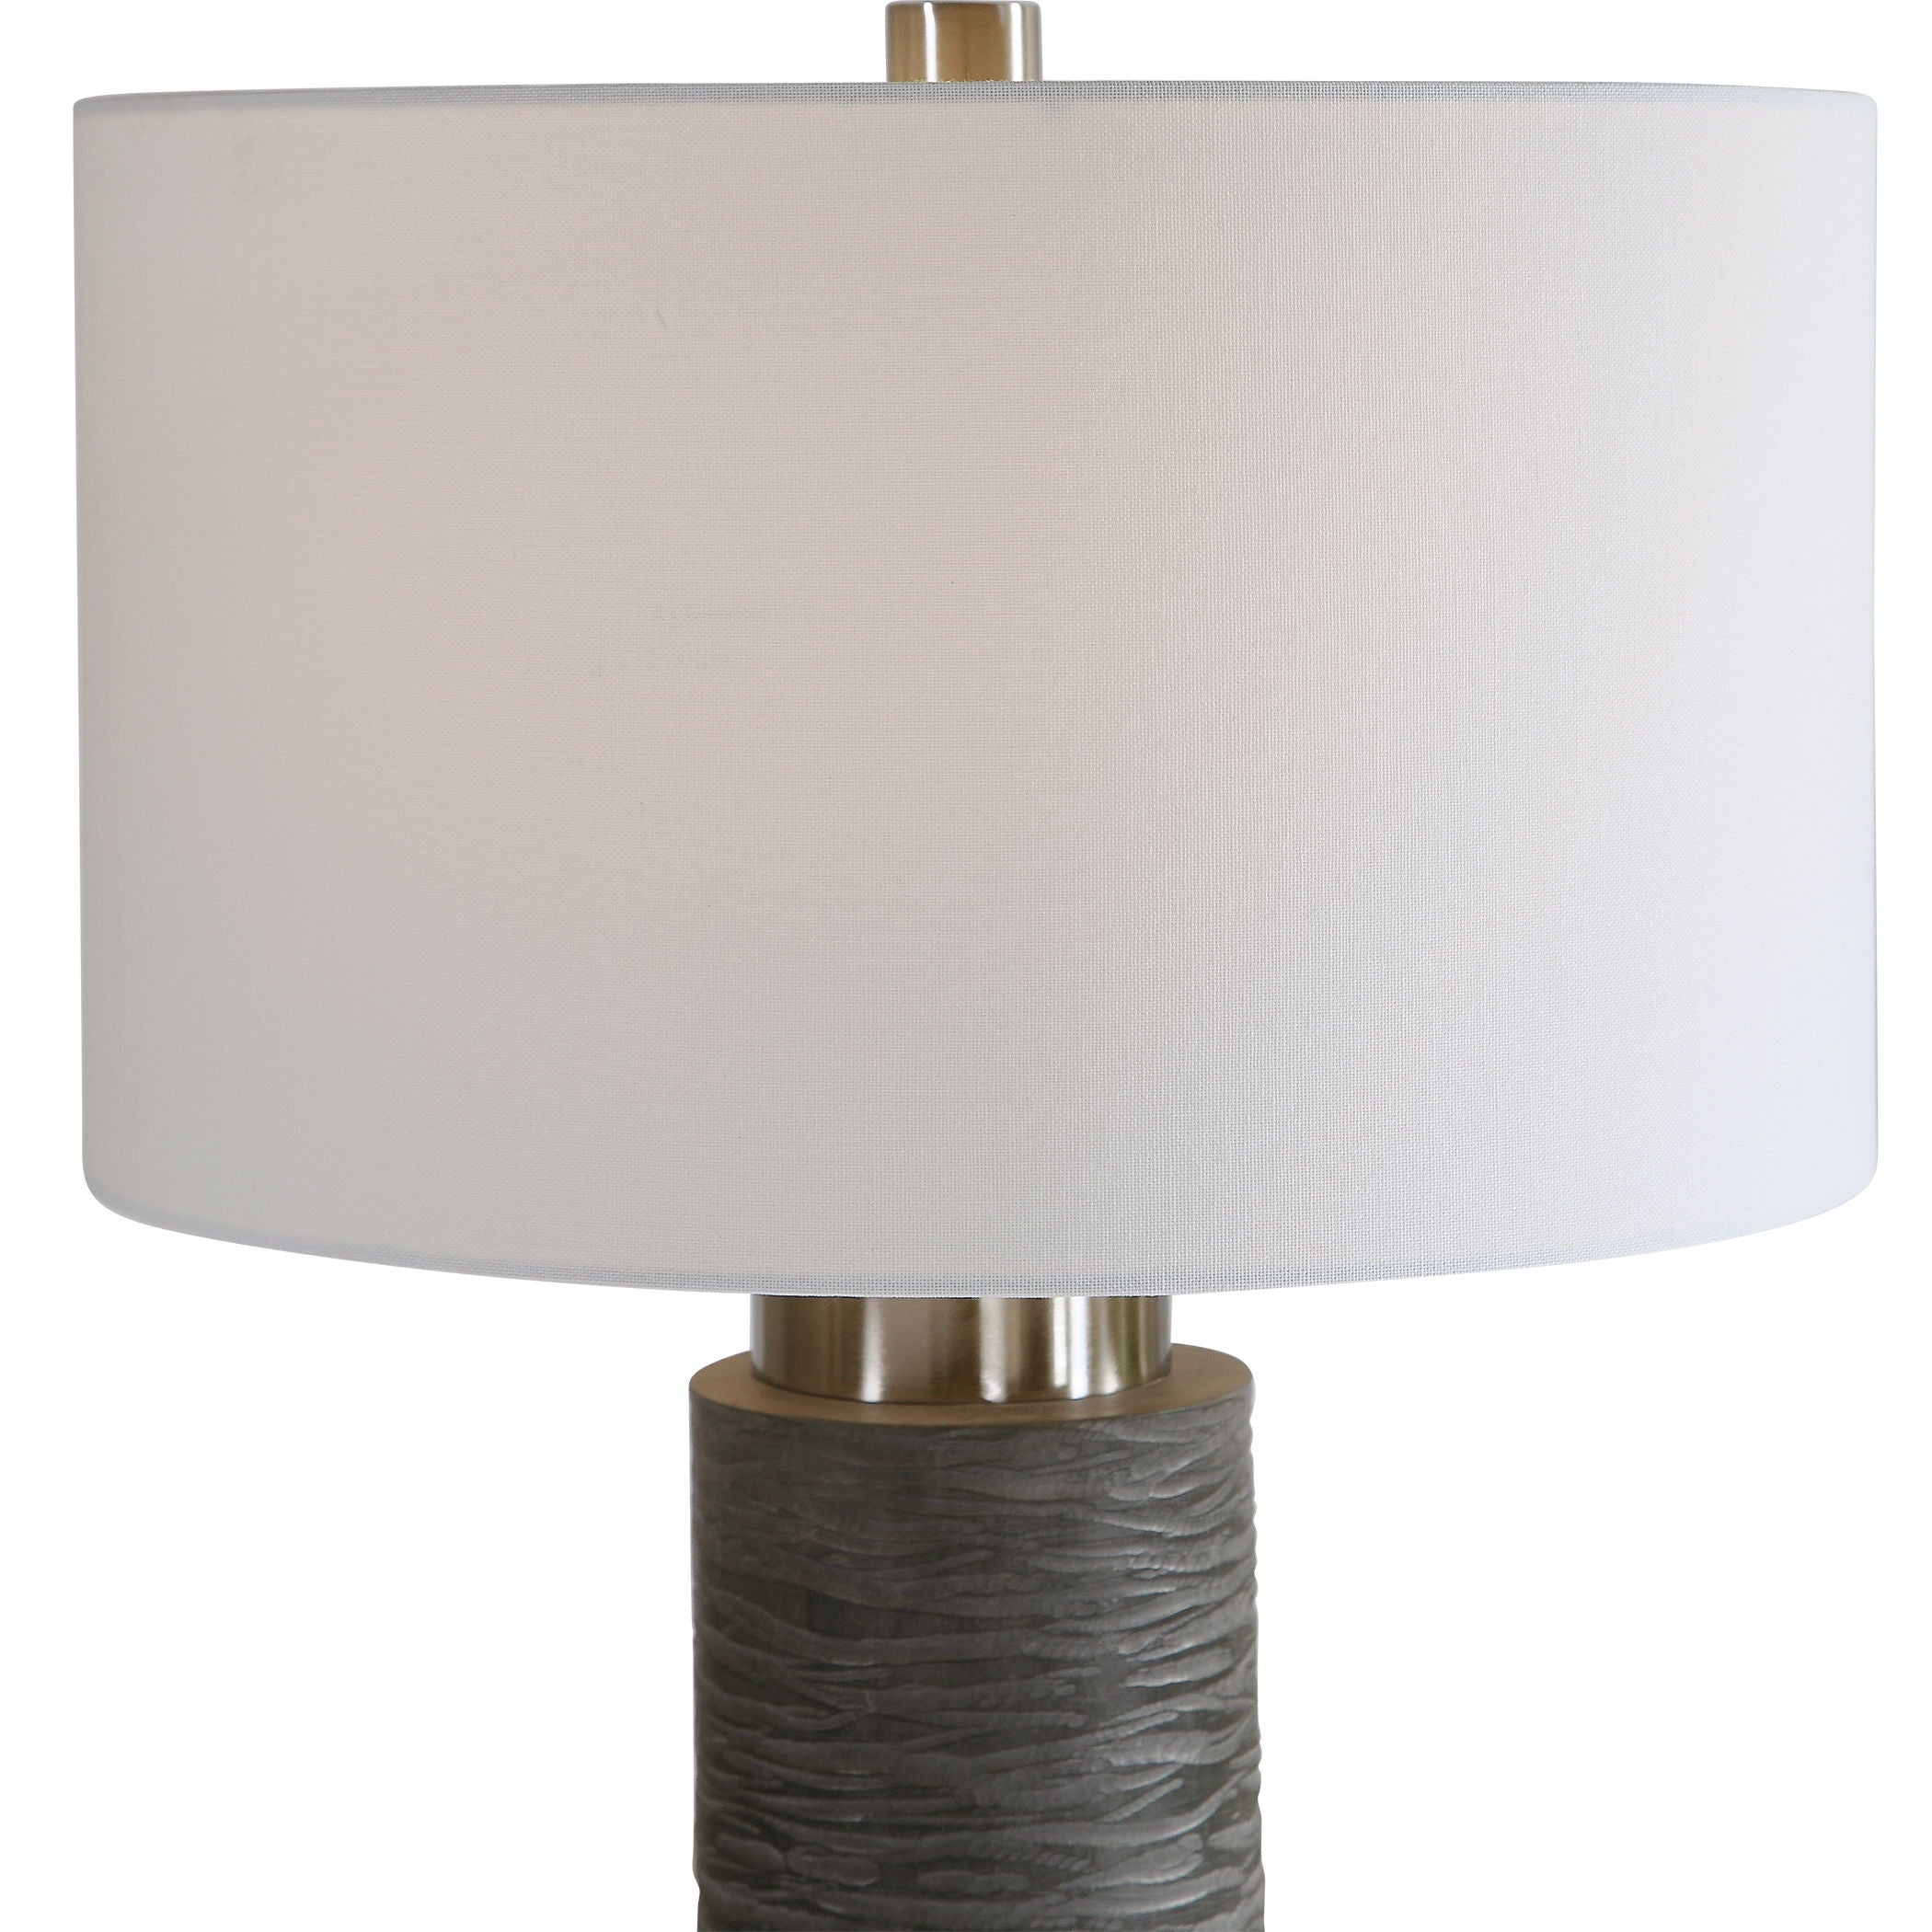 Strathmore - Table Lamp - Stone Gray